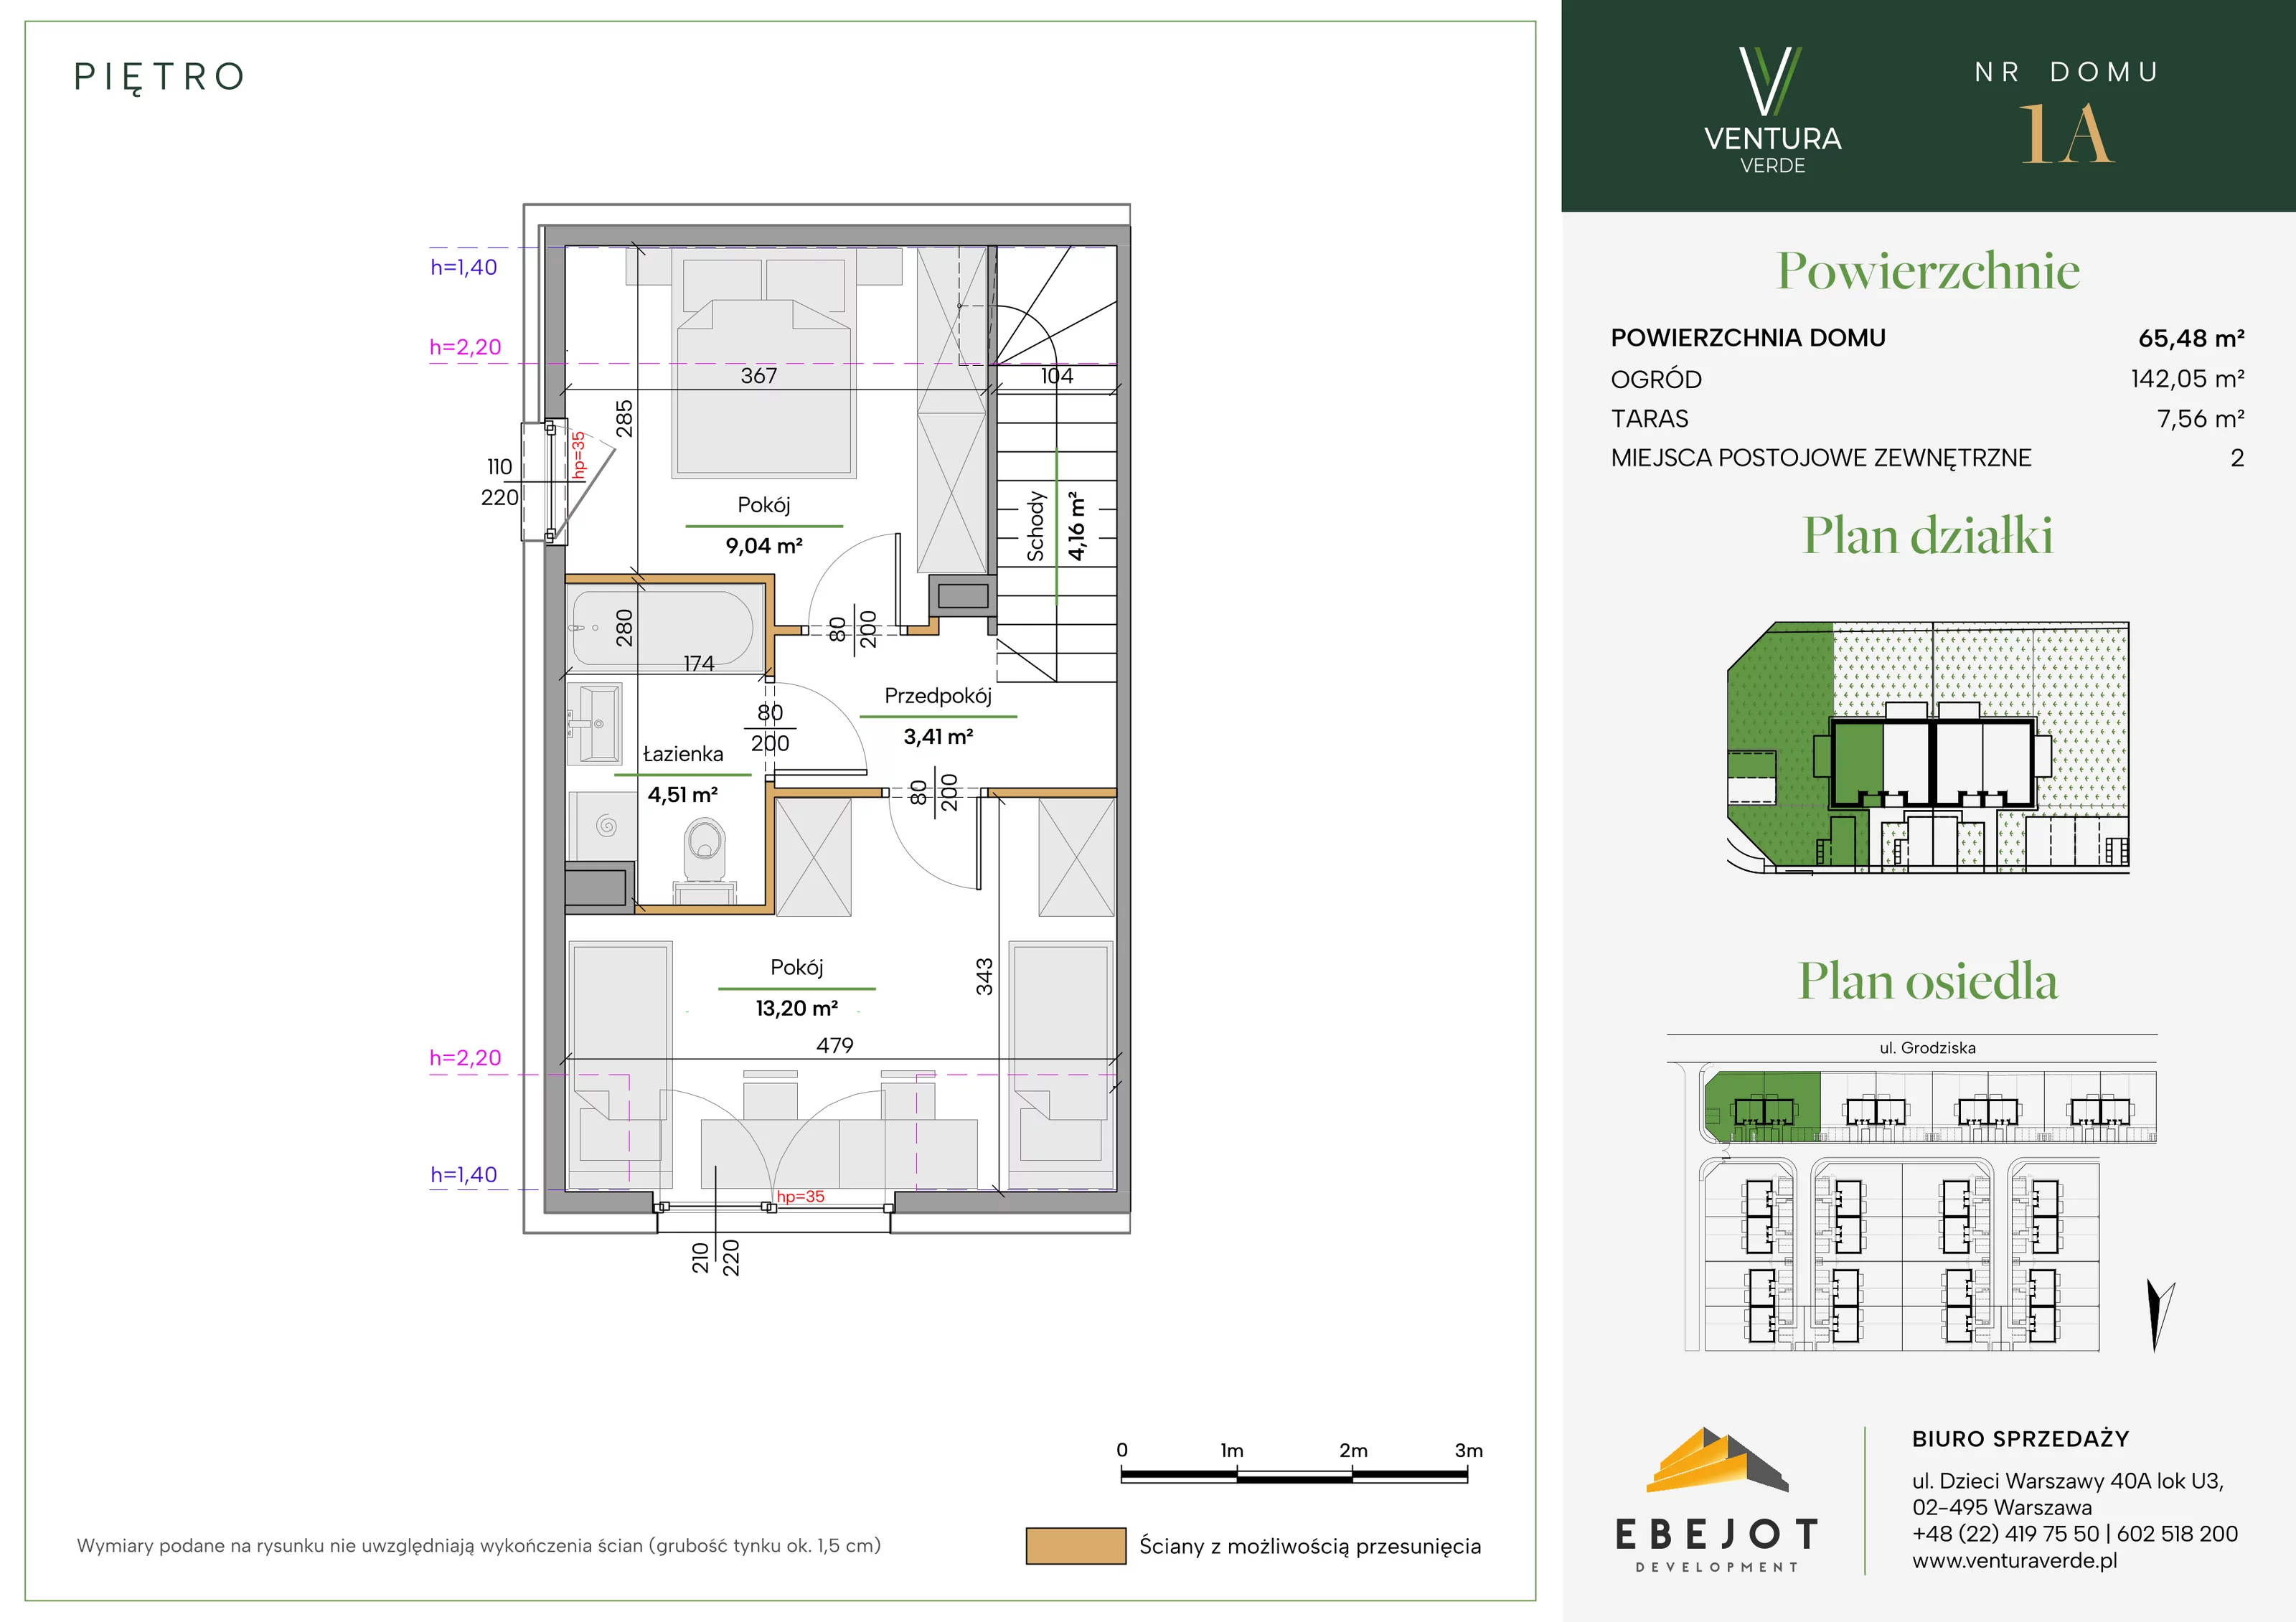 Dom 65,48 m², oferta nr 1A, Ventura Verde II, Stara Wieś, ul. Grodziska